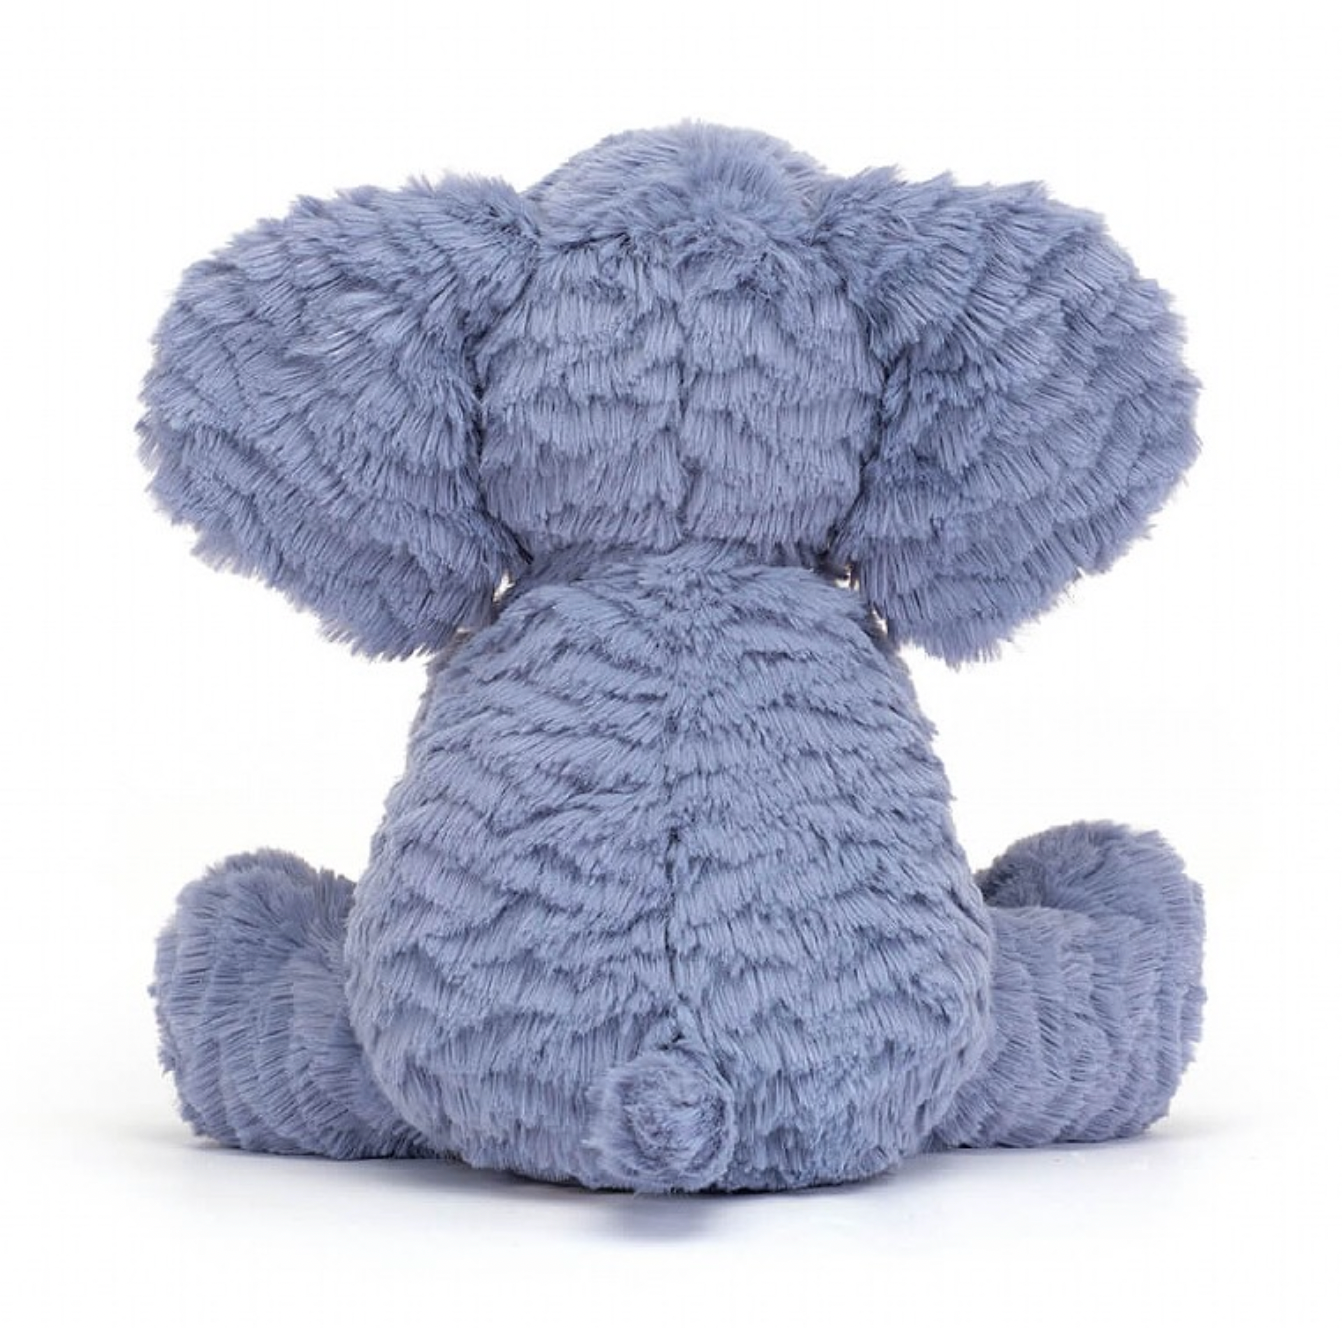 Jellycat Bashful Elephant